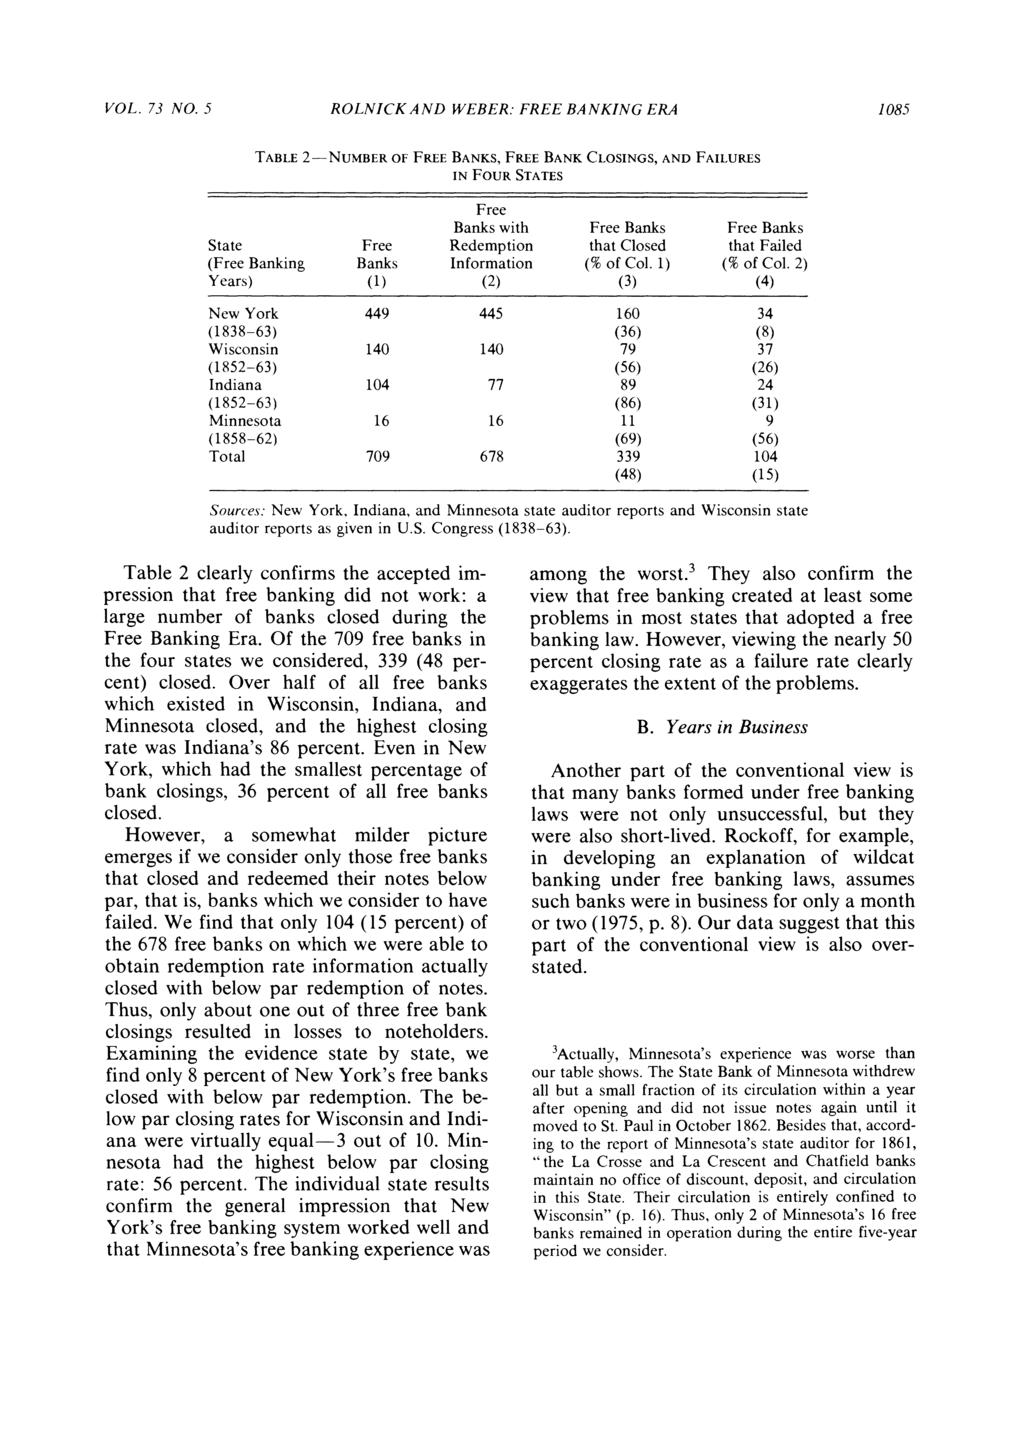 Free Banking Era VOL. 73 NO. 5 ROLNICKAND WEBER: FREE BANKING ERA 1085 Rolnick and Weber, AER, 1983.